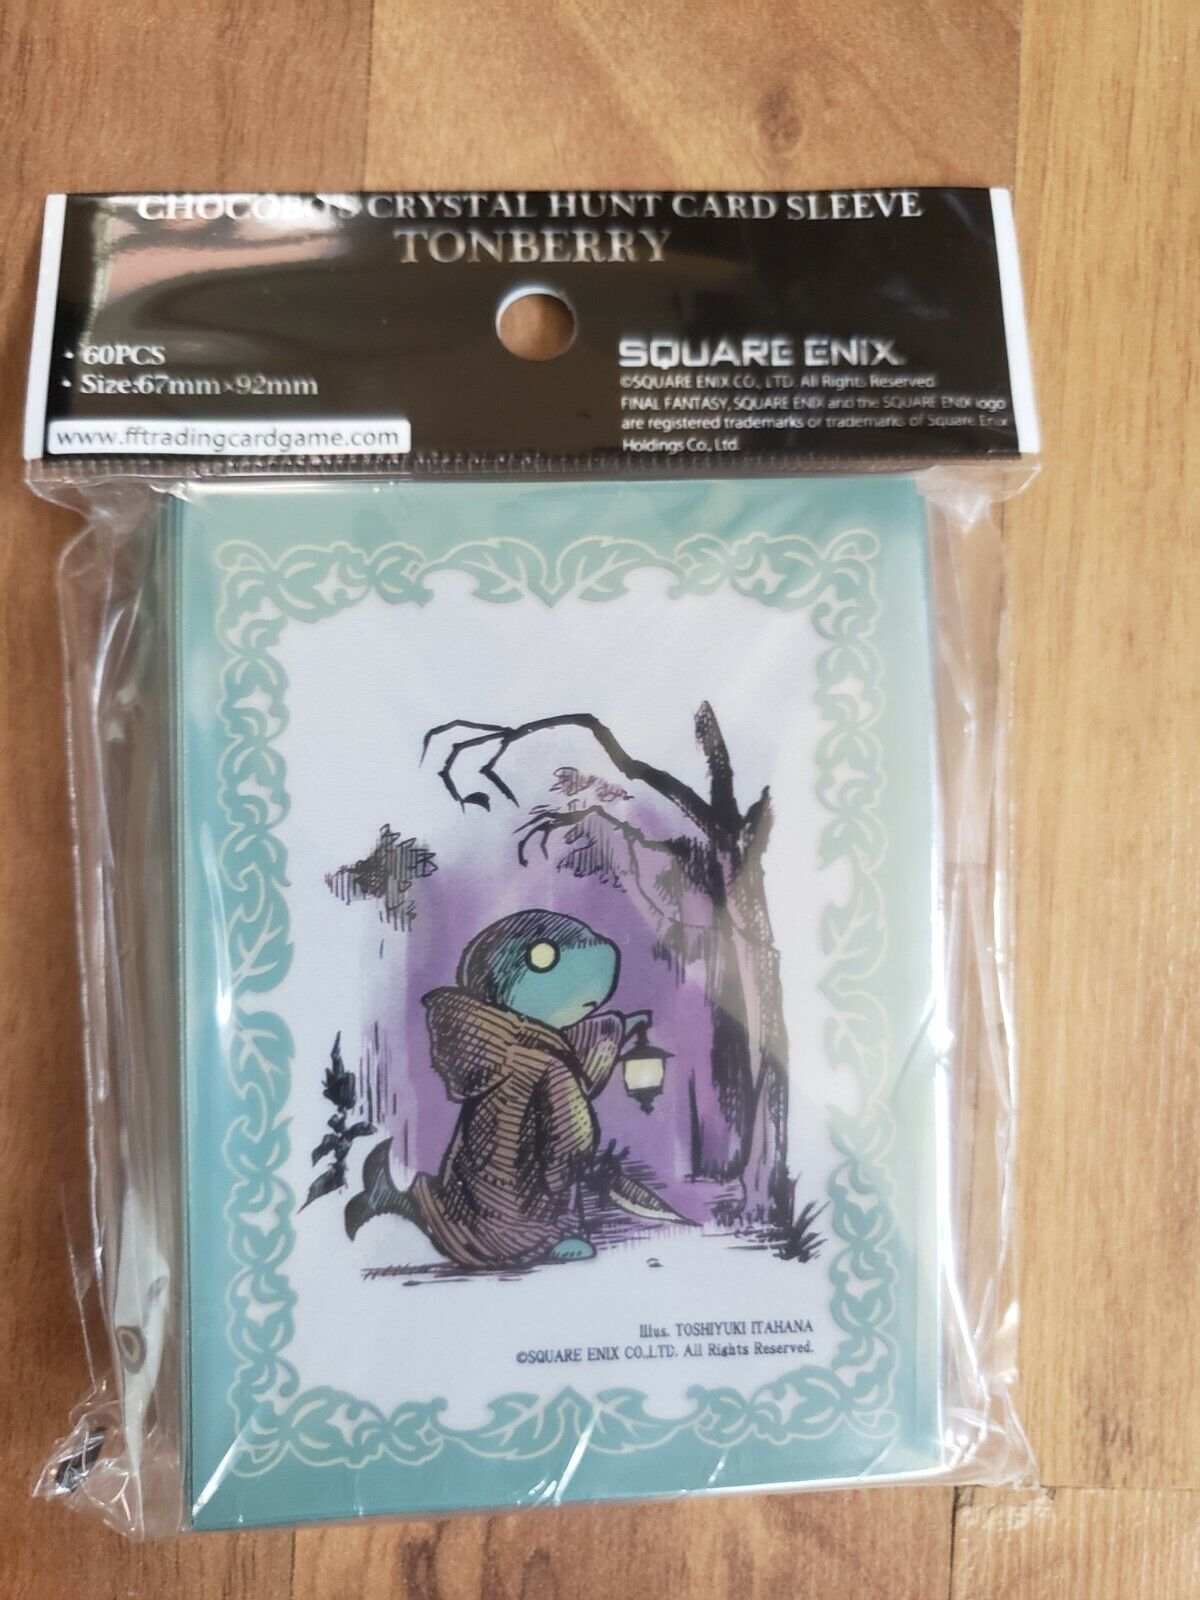 Official Final Fantasy TCG FFTCG Chocobo's Crystal Hunt Card Sleeves - Tonberry